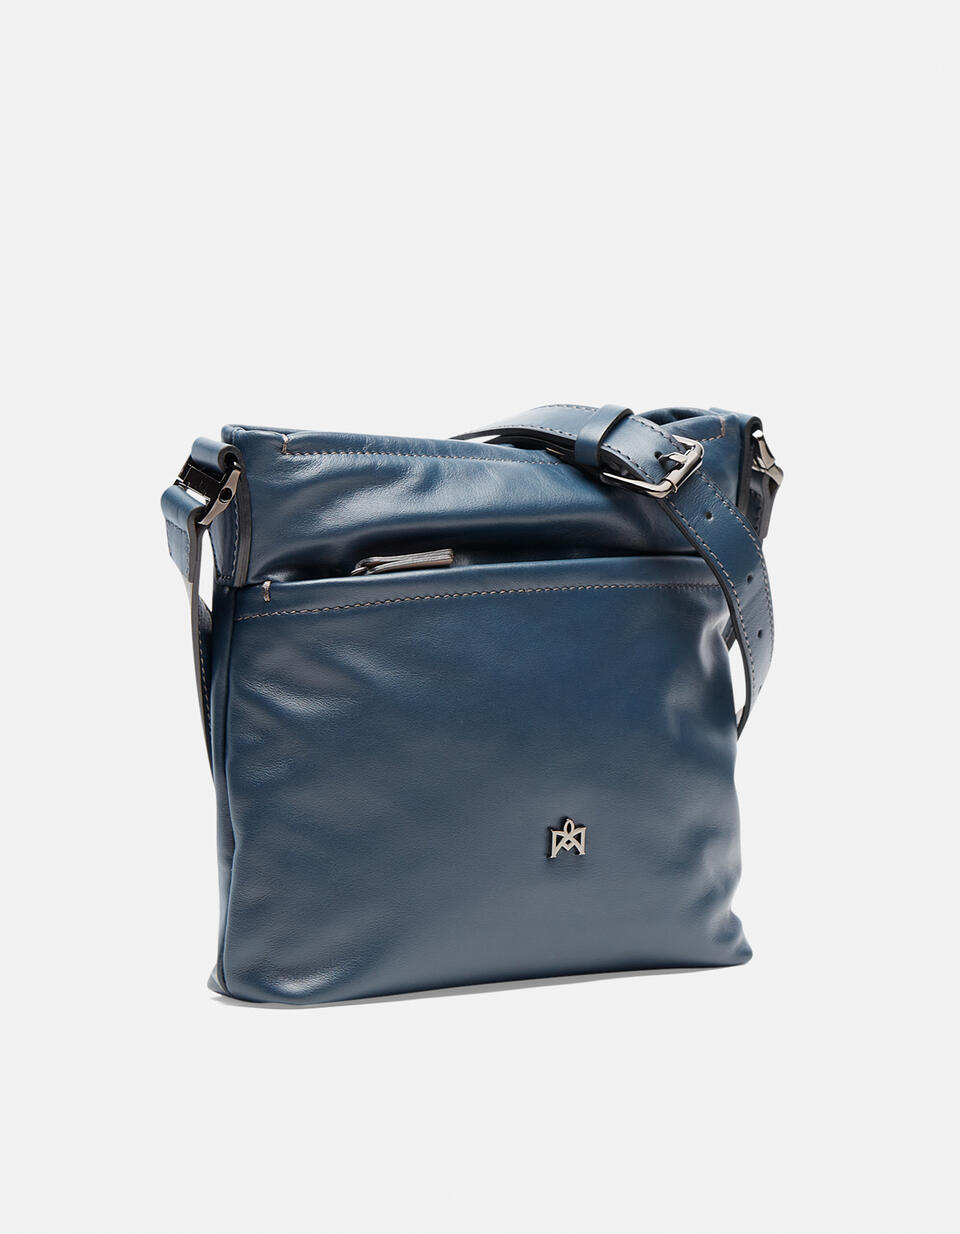 Adam Shoulder bag with front pocket - Crossbody Bags - MEN'S BAGS | bags BLUTAUPE - Crossbody Bags - MEN'S BAGS | bagsCuoieria Fiorentina